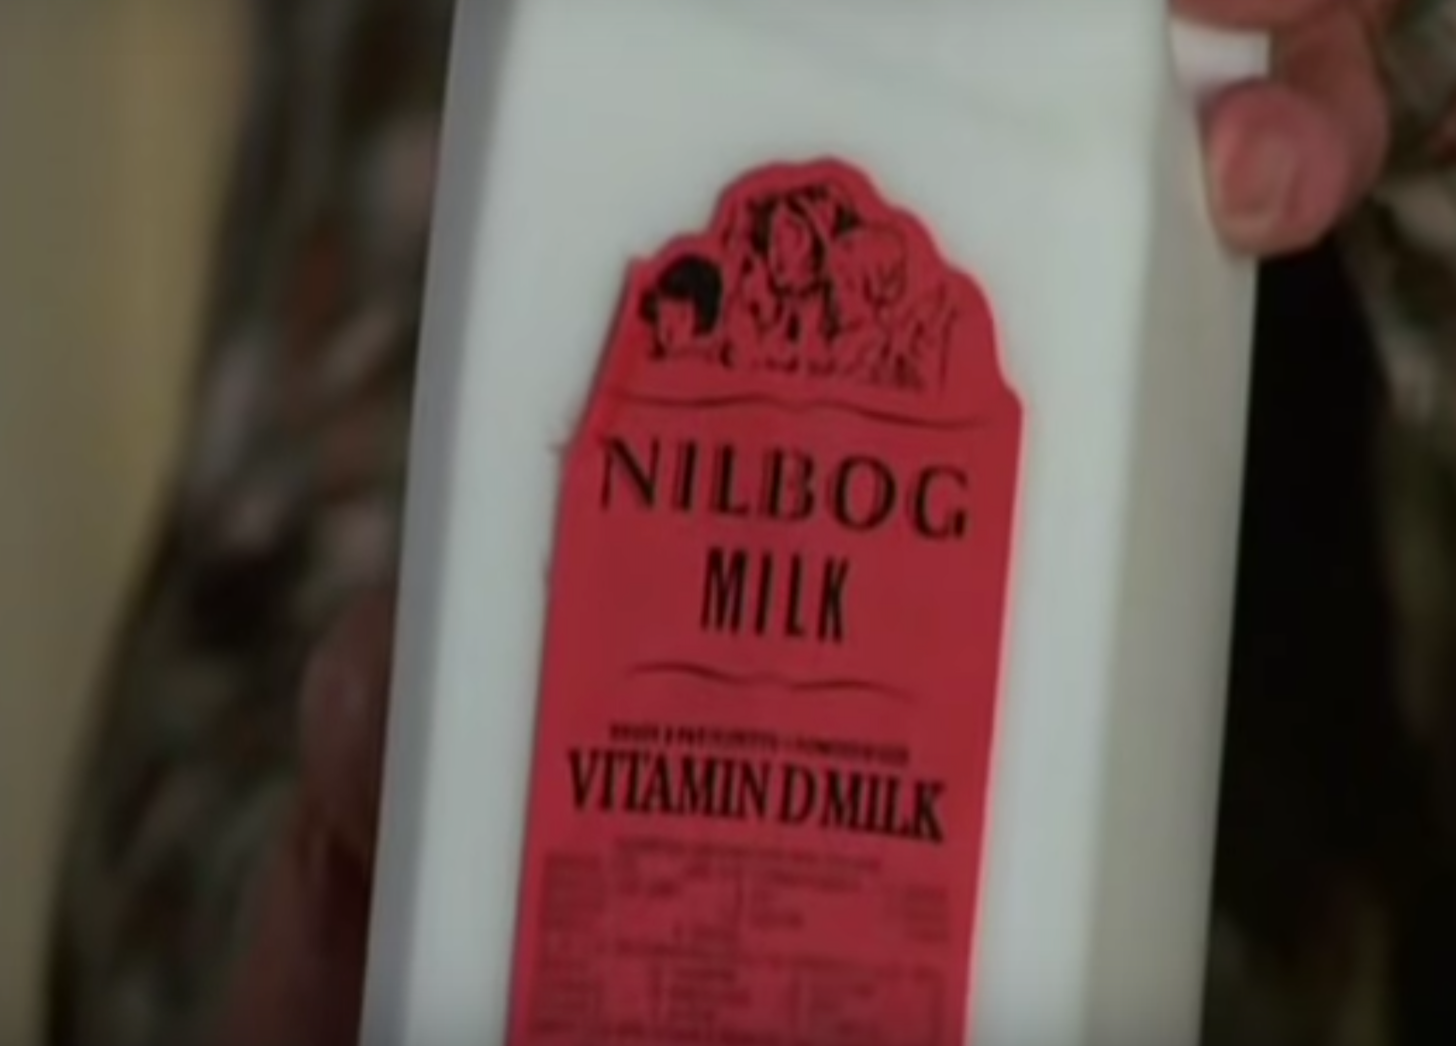 A still from Troll 2 showing Nilbog Milk, Vitamin D Milk. As the shopkeeper says, “Special milk, high in vitamins.”